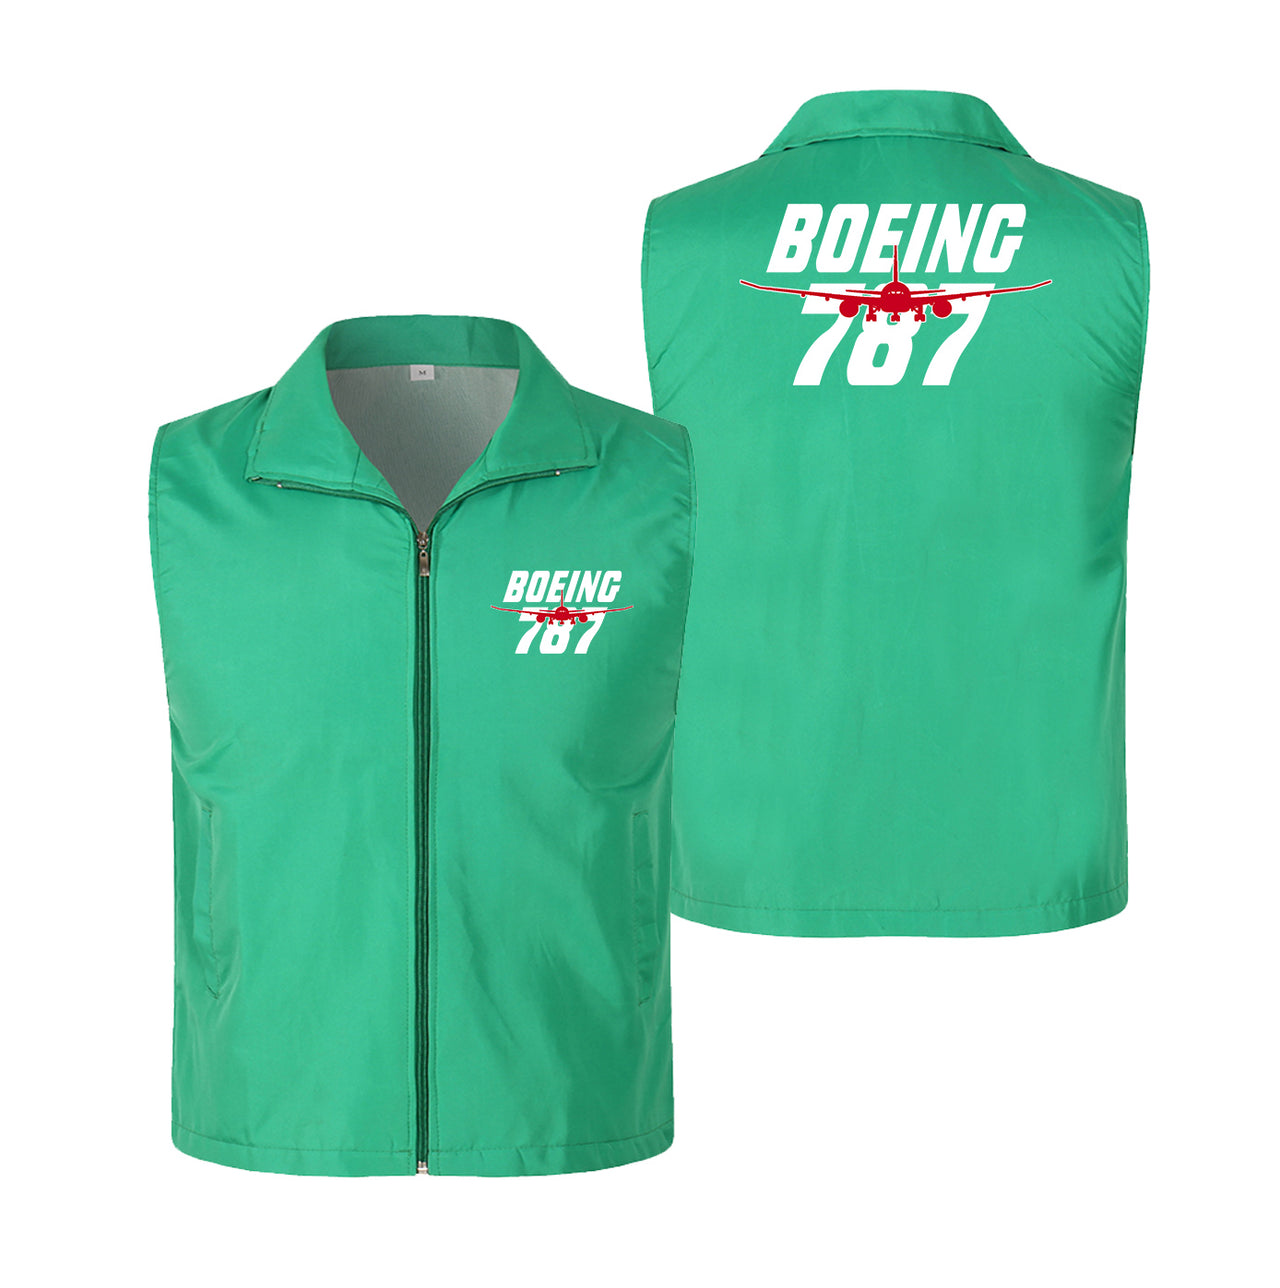 Amazing Boeing 787 Designed Thin Style Vests